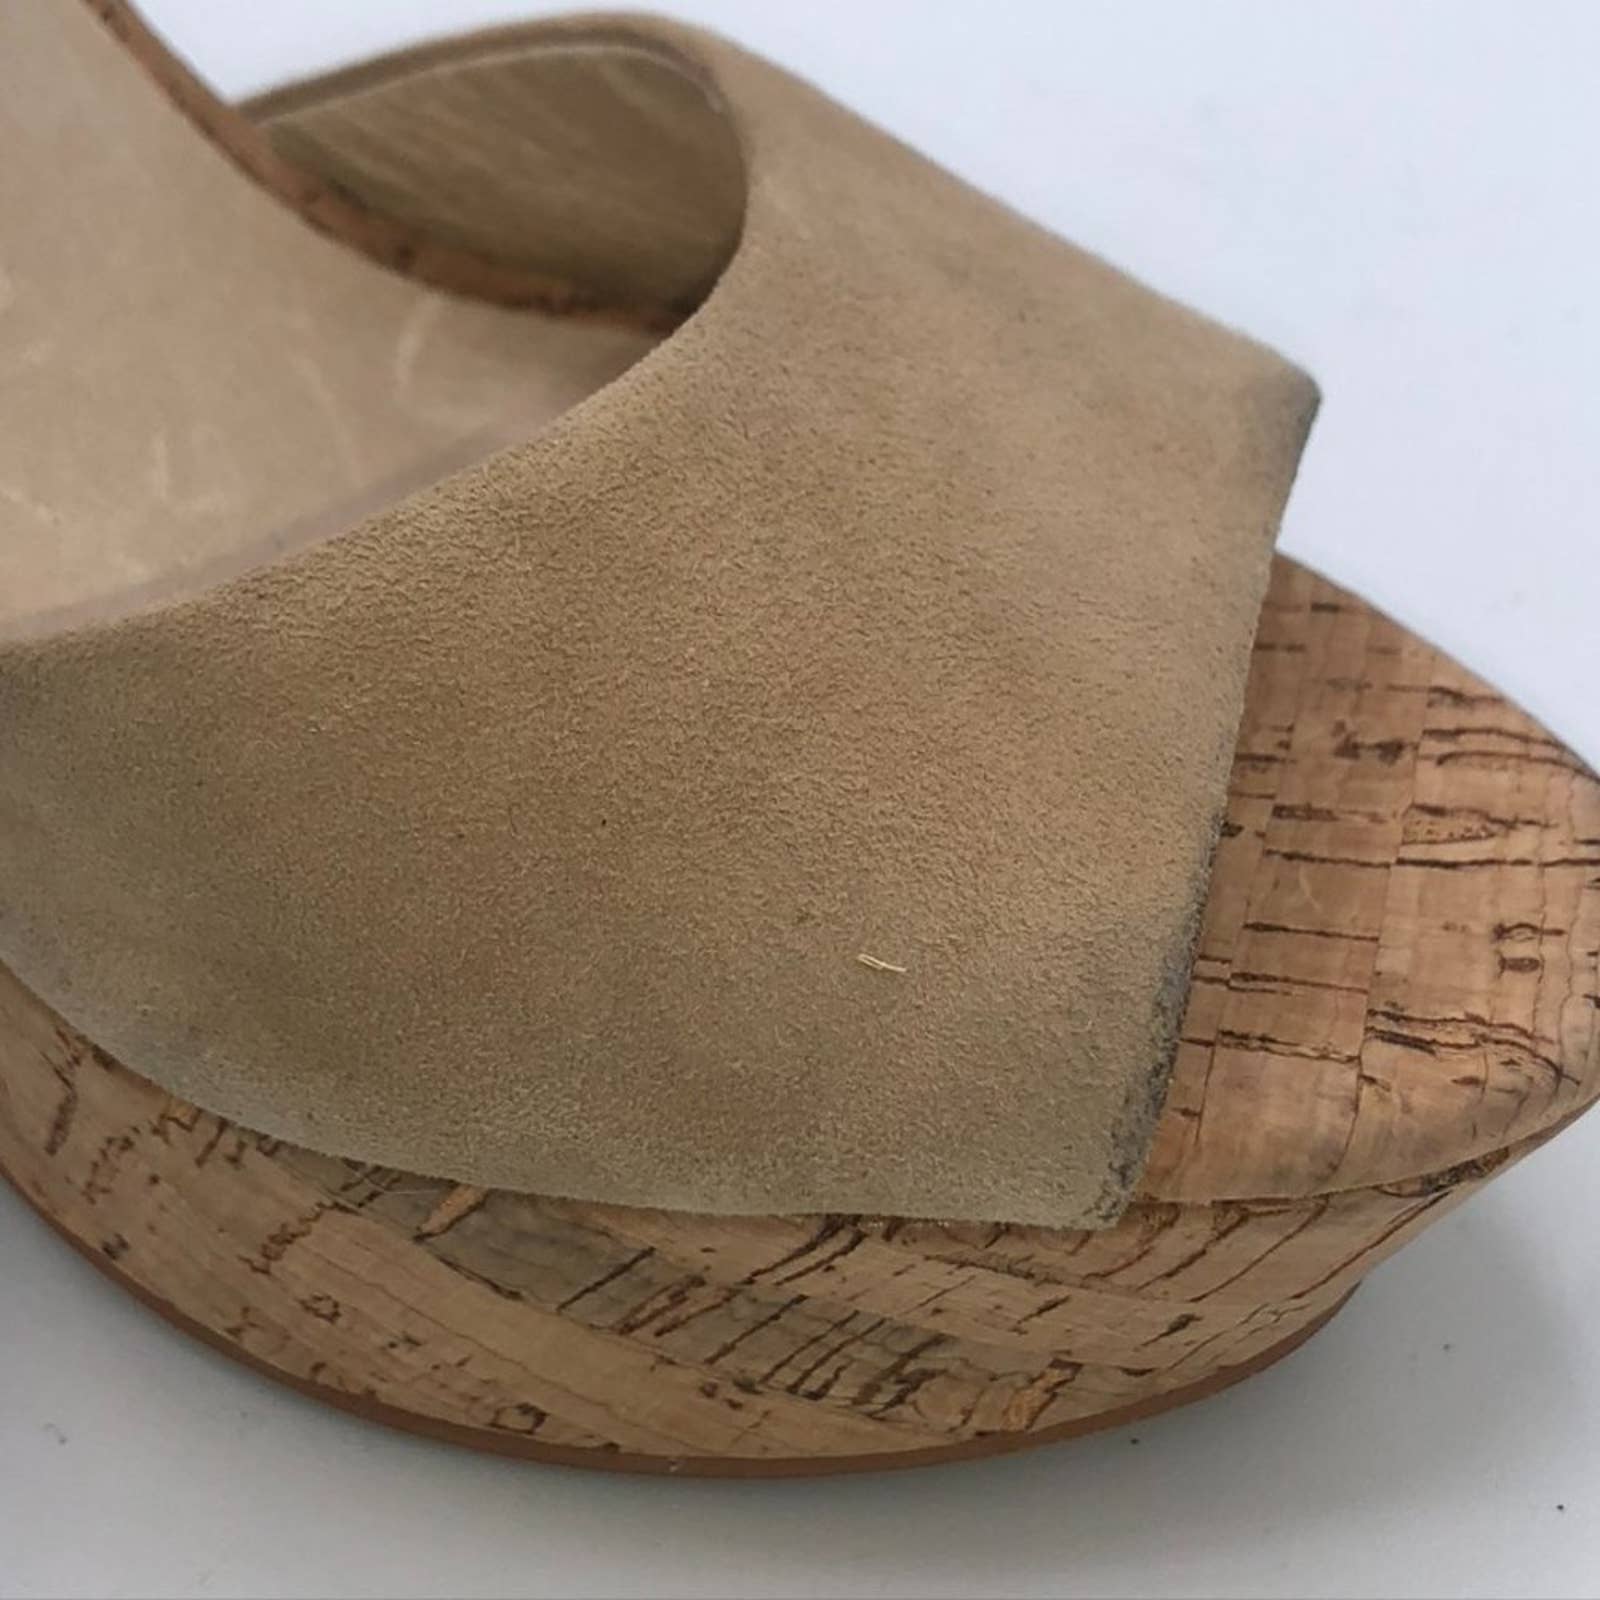 Wishbone Collection Faux Cork Block Heel Sandals - Size 6Markita's ClosetThe Wishbone Collection